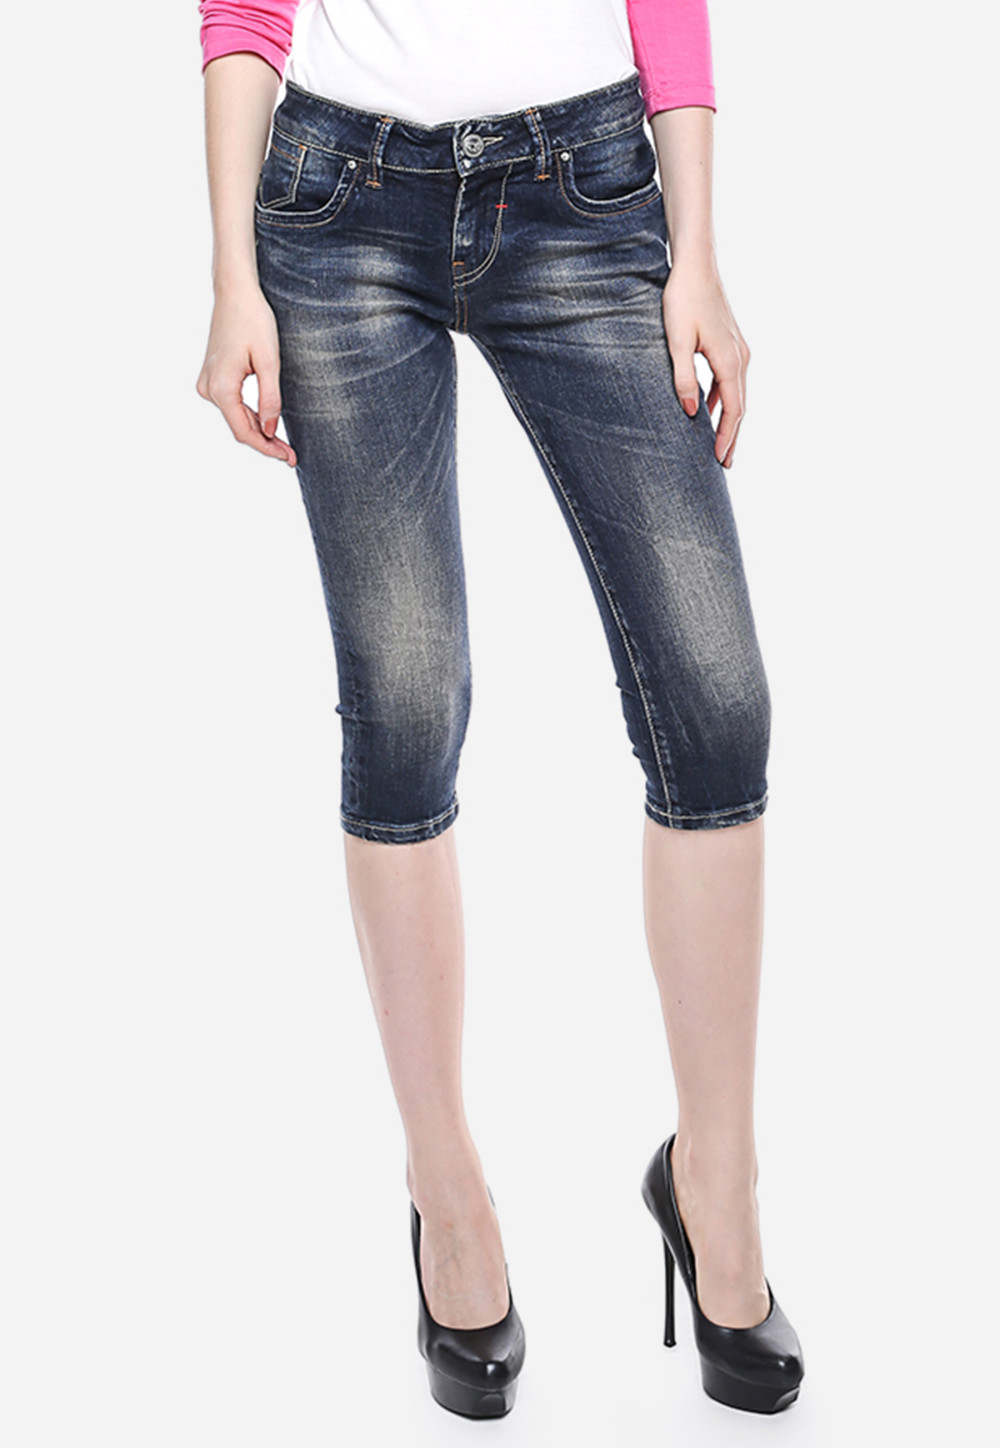 Celana Capri Biru  Navy  Slim Fit Jeans  Premium